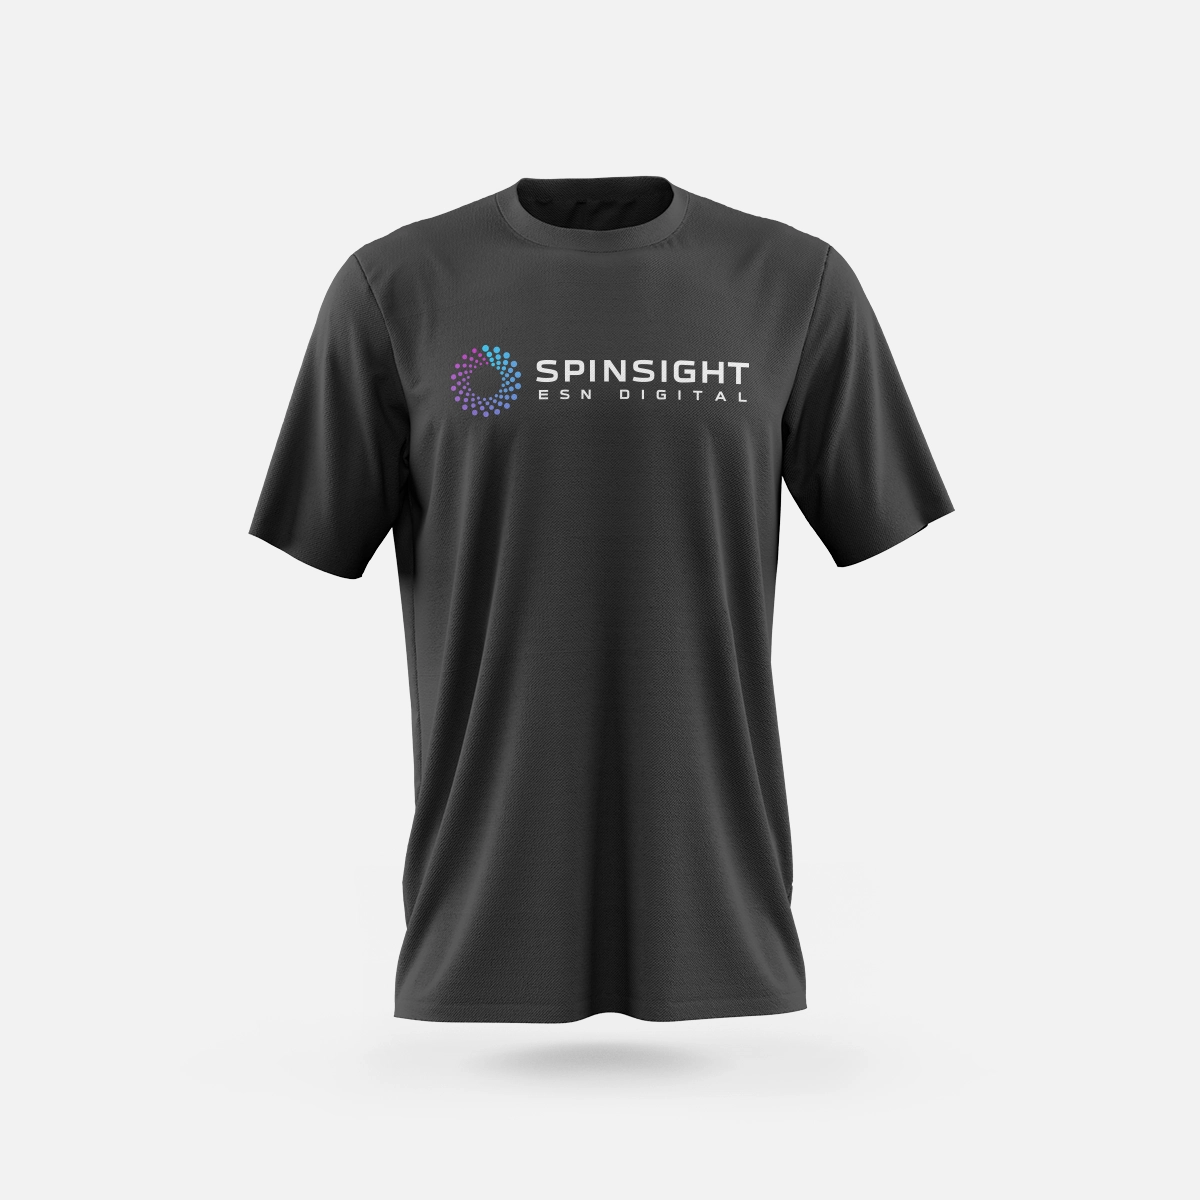 Team shirt - Spinsight